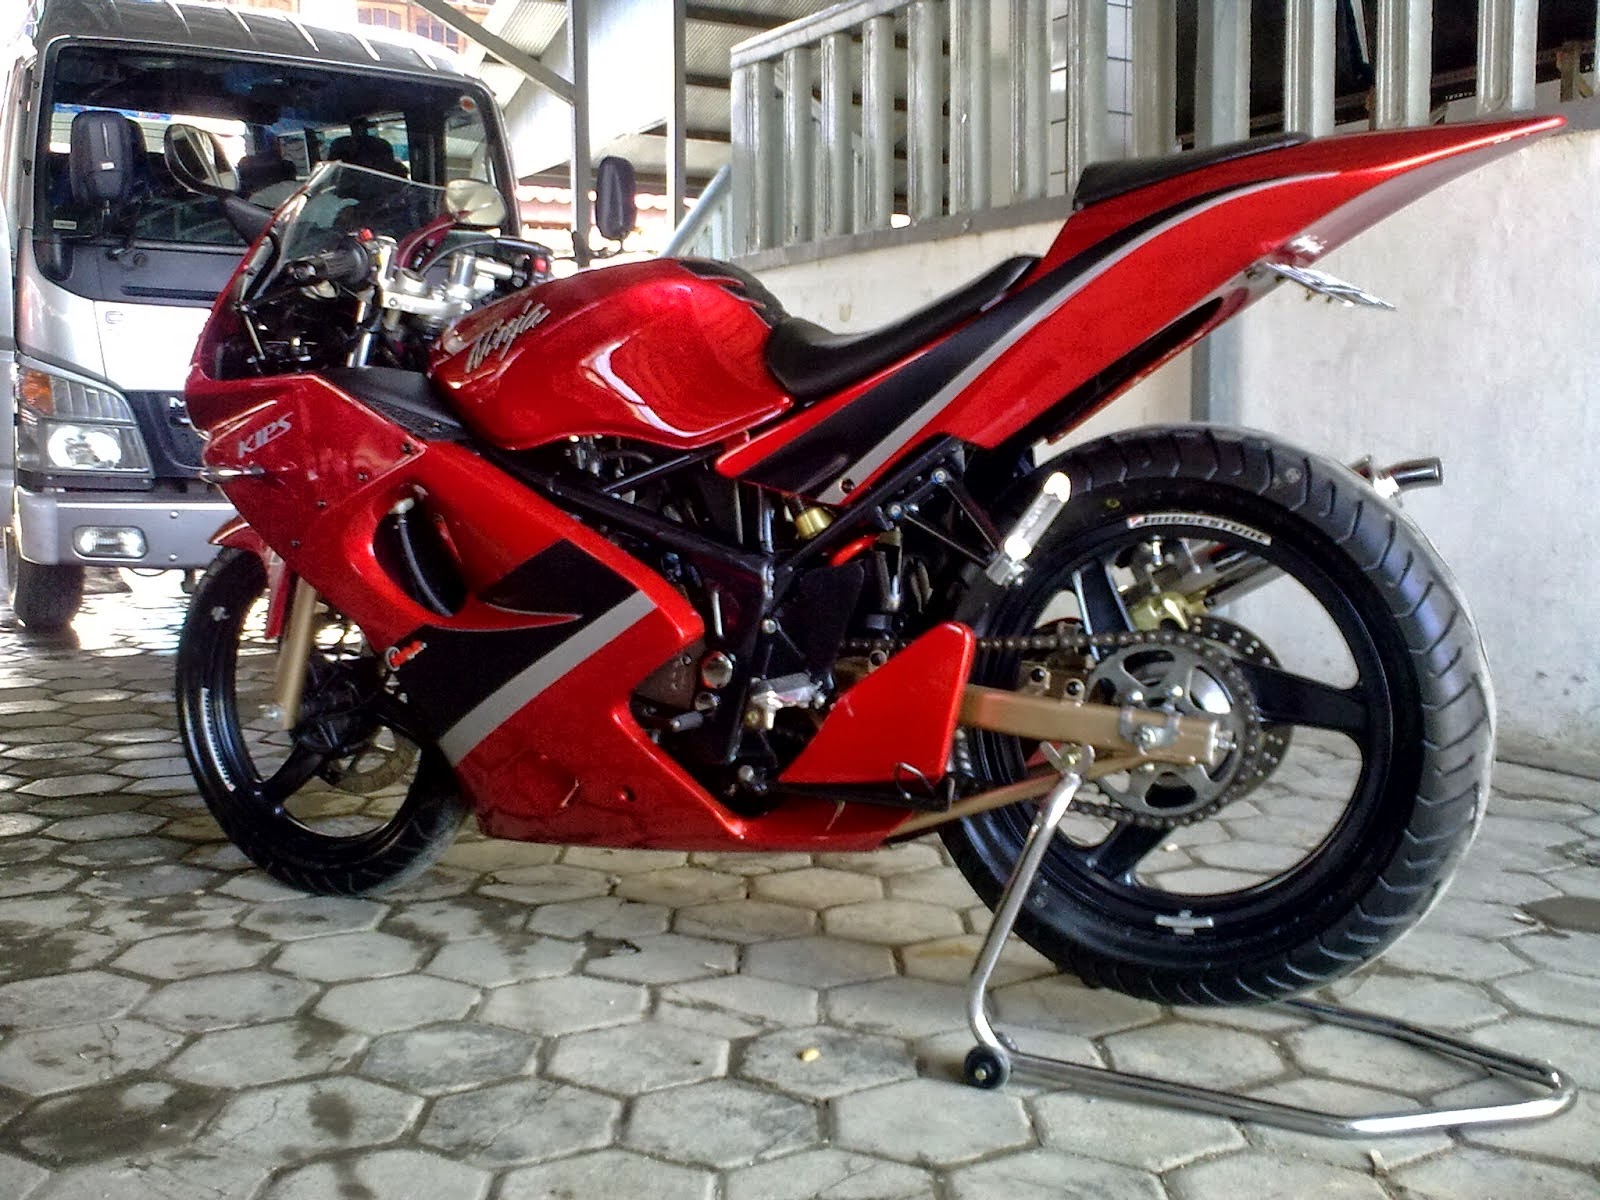 Foto Modifikasi Motor Kawasaki Ninja Rr 150 Cc